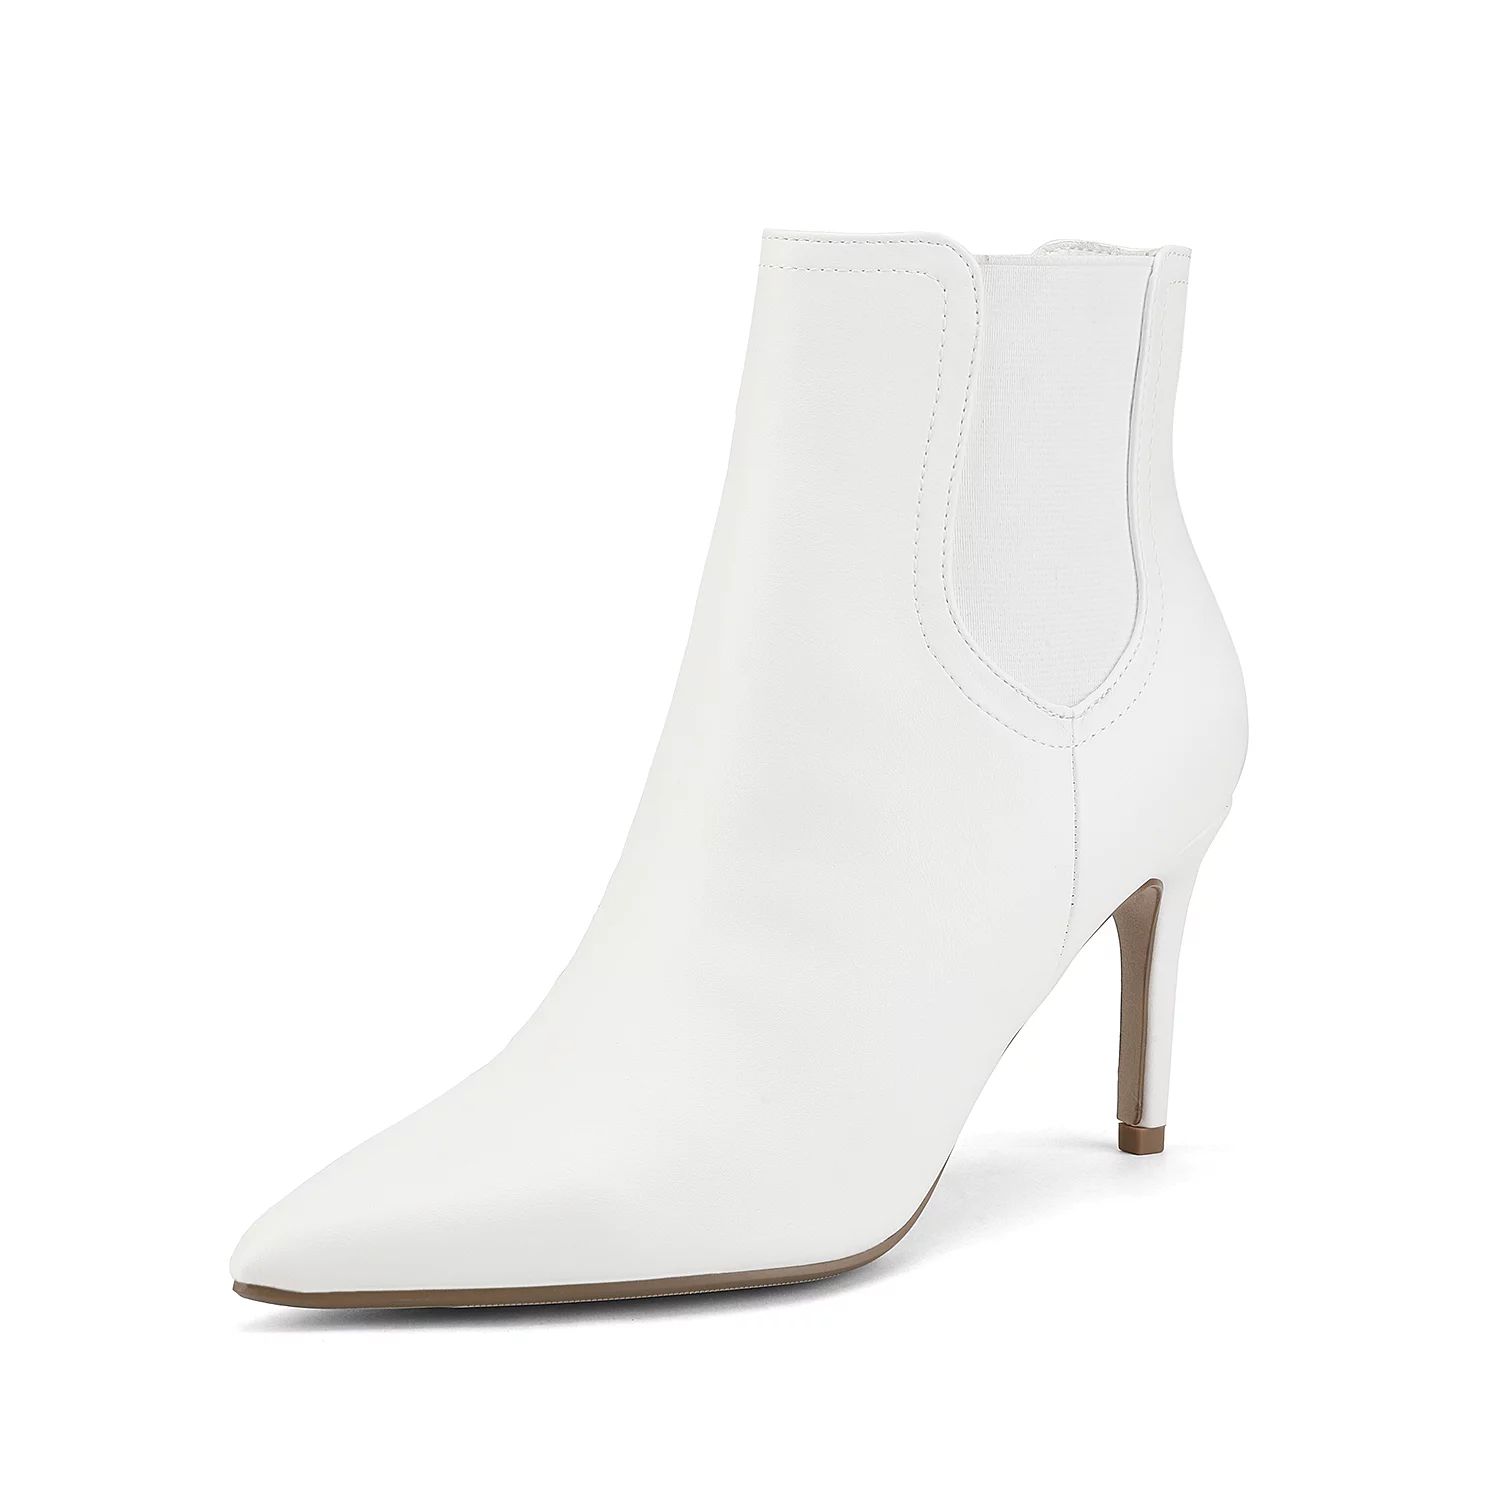 Dream Pairs Women's Fashion Stilettos High Heel Pointed Toe Ankle Boots KIZZY-1 WHITE/PU Size 8 | Walmart (US)